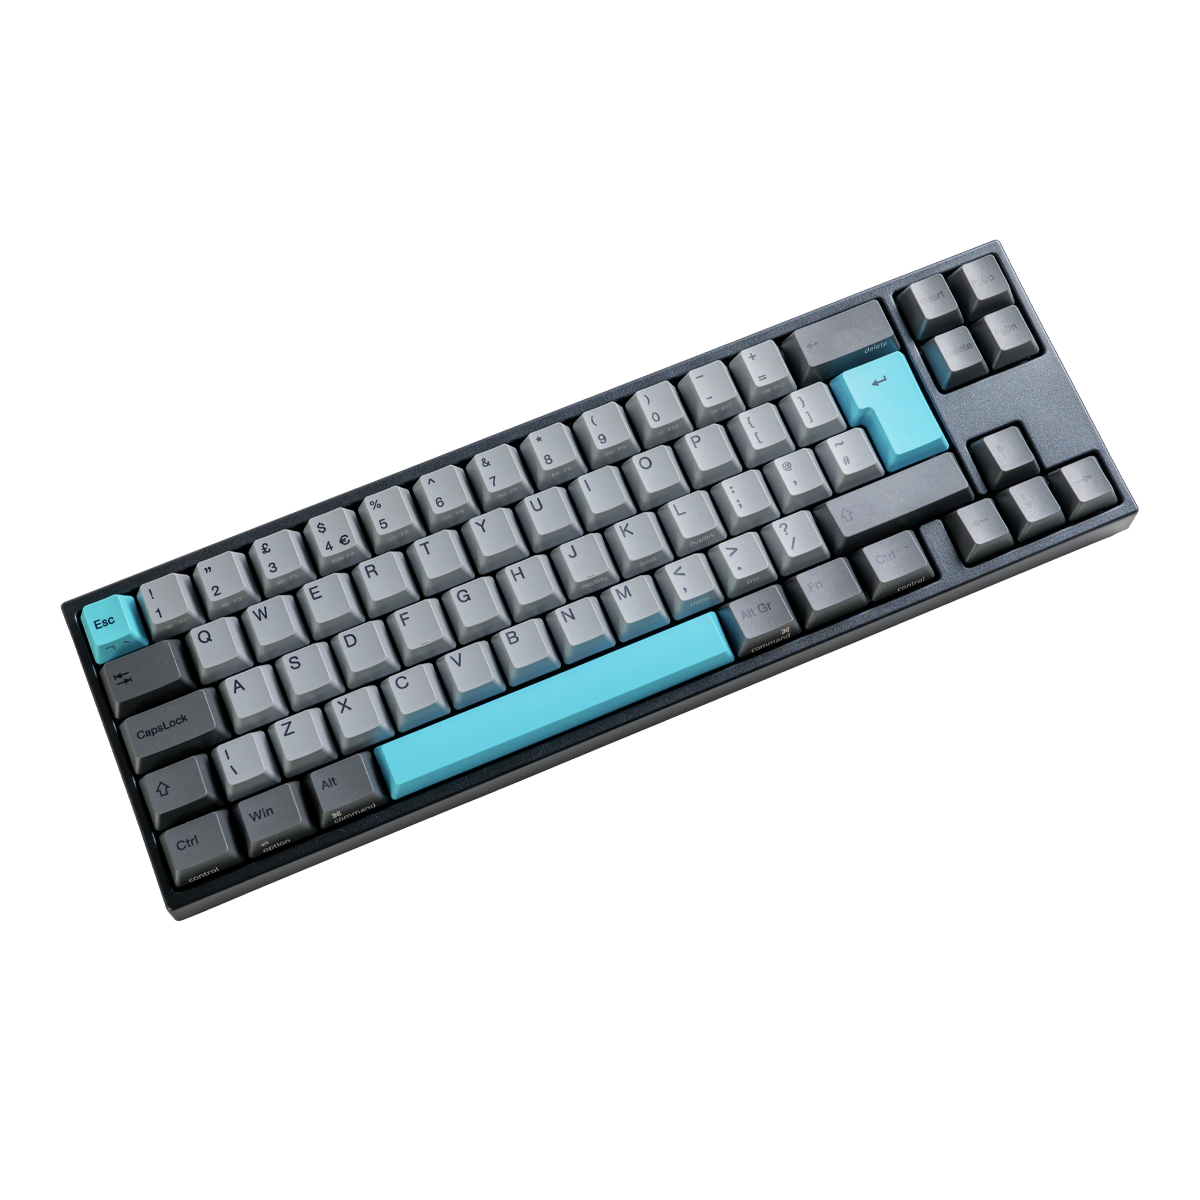 Ducky - Ducky x Varmilo MIYA 69 Pro Moonlight 65% Cherry MX Brown Switch Gaming Keyboard